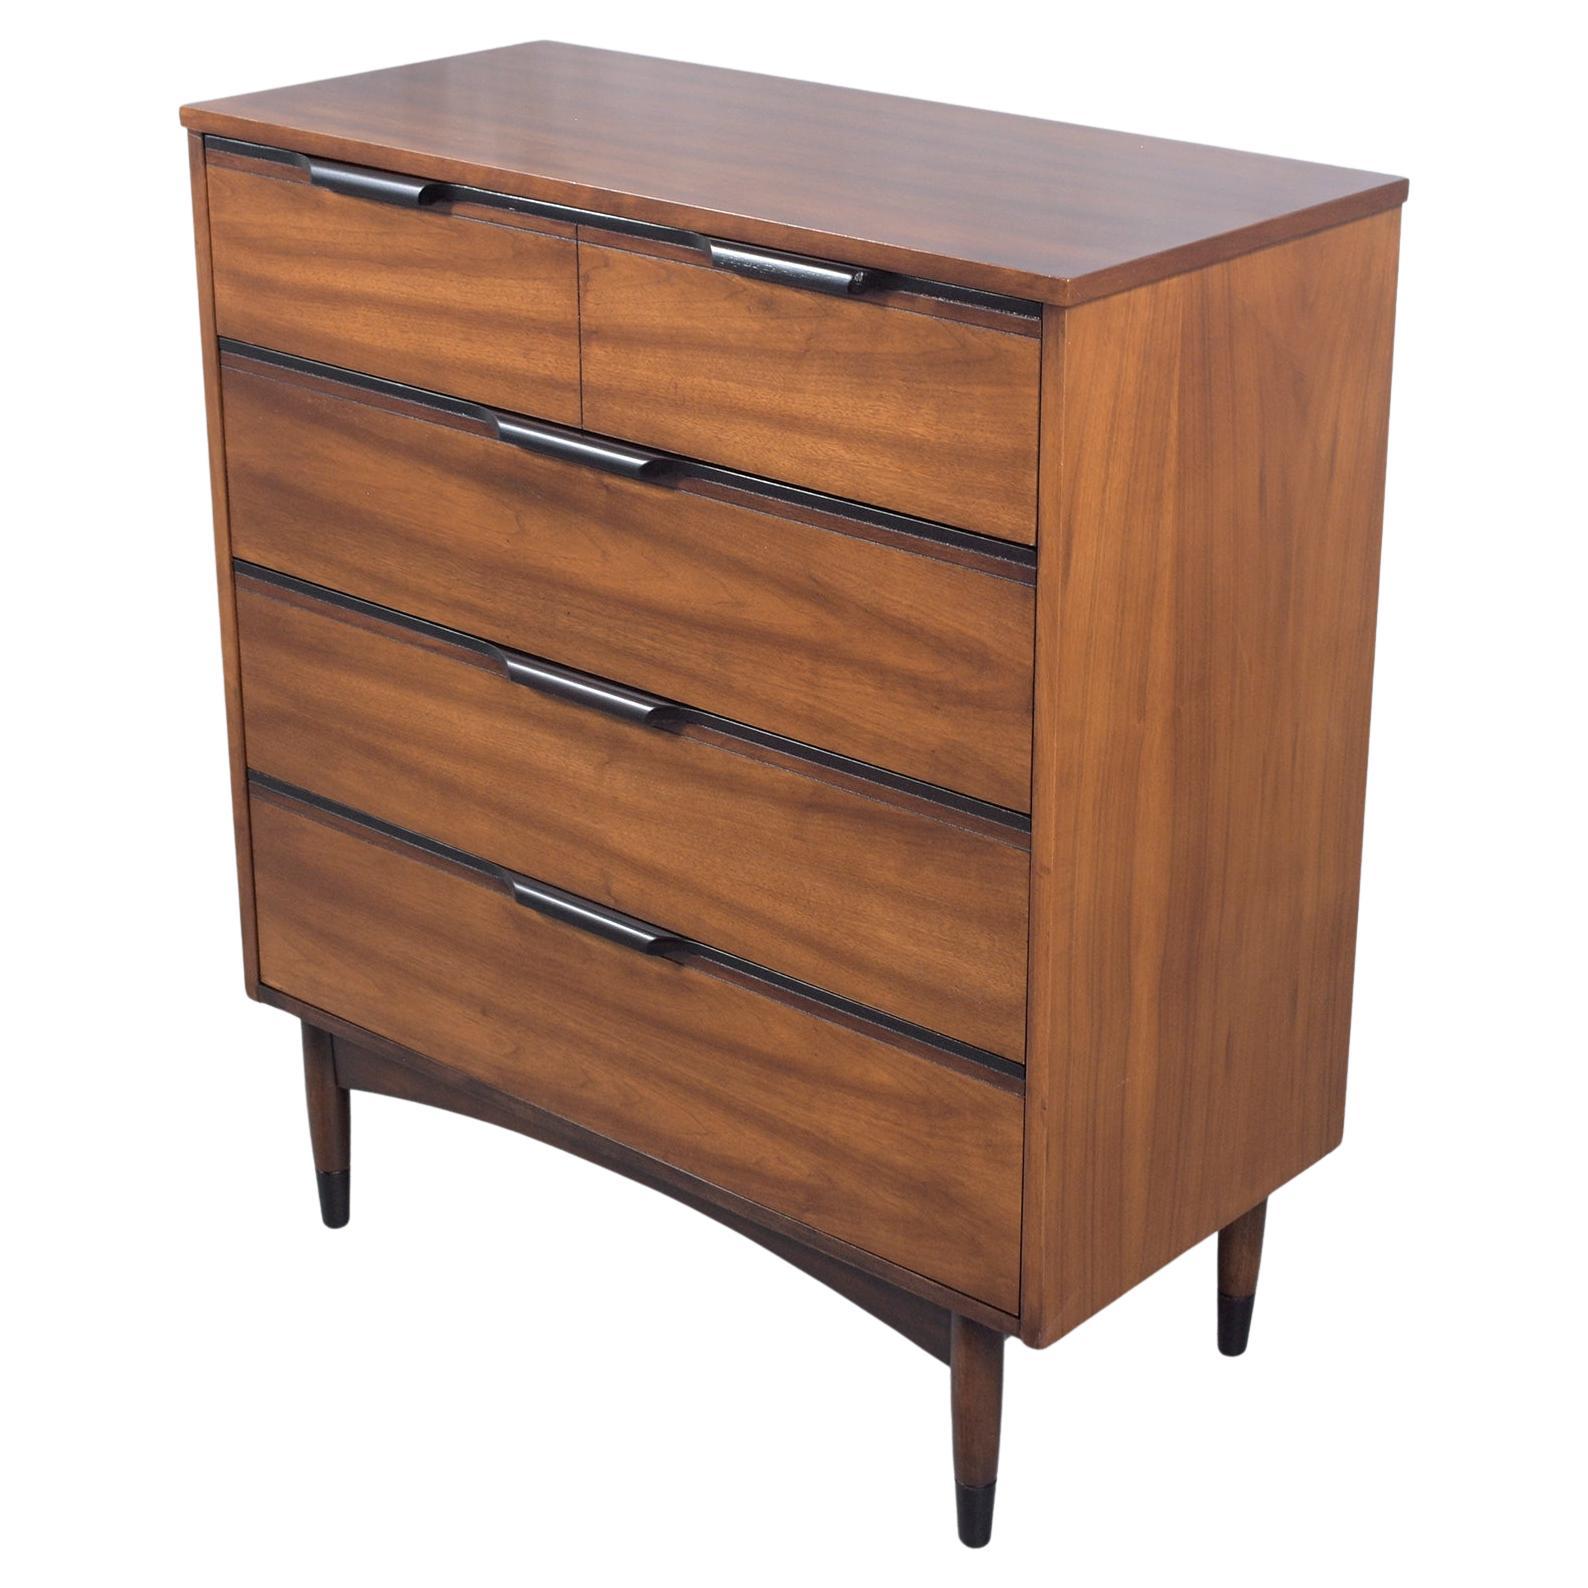 Modern Walnut Dresser Restored: Two-Tone Elegance & Craftsmanship